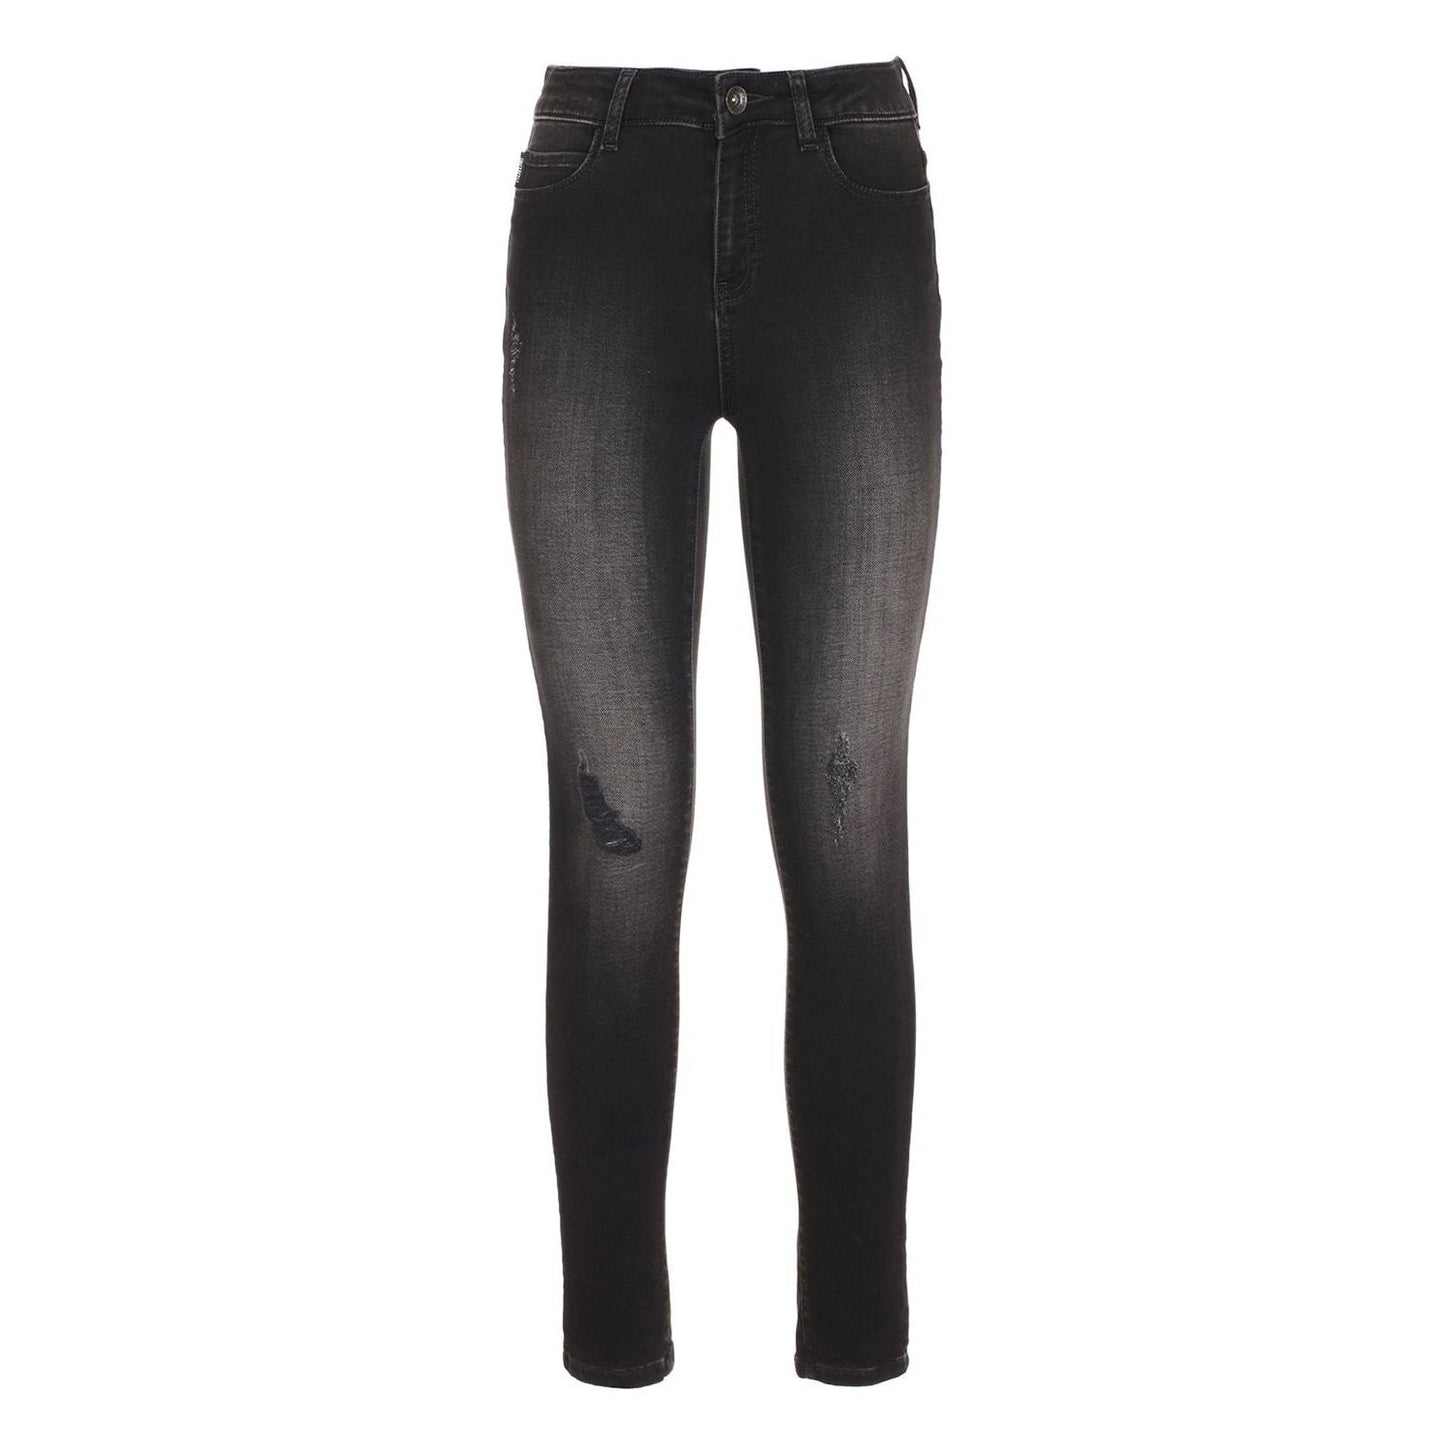 Imperfect Sleek Black Cotton-Blend Sweat Pants iwwpf-imperfect-jeans-pant-2 Jeans & Pants stock_product_image_1621_971234610-72154c84-20a.jpg